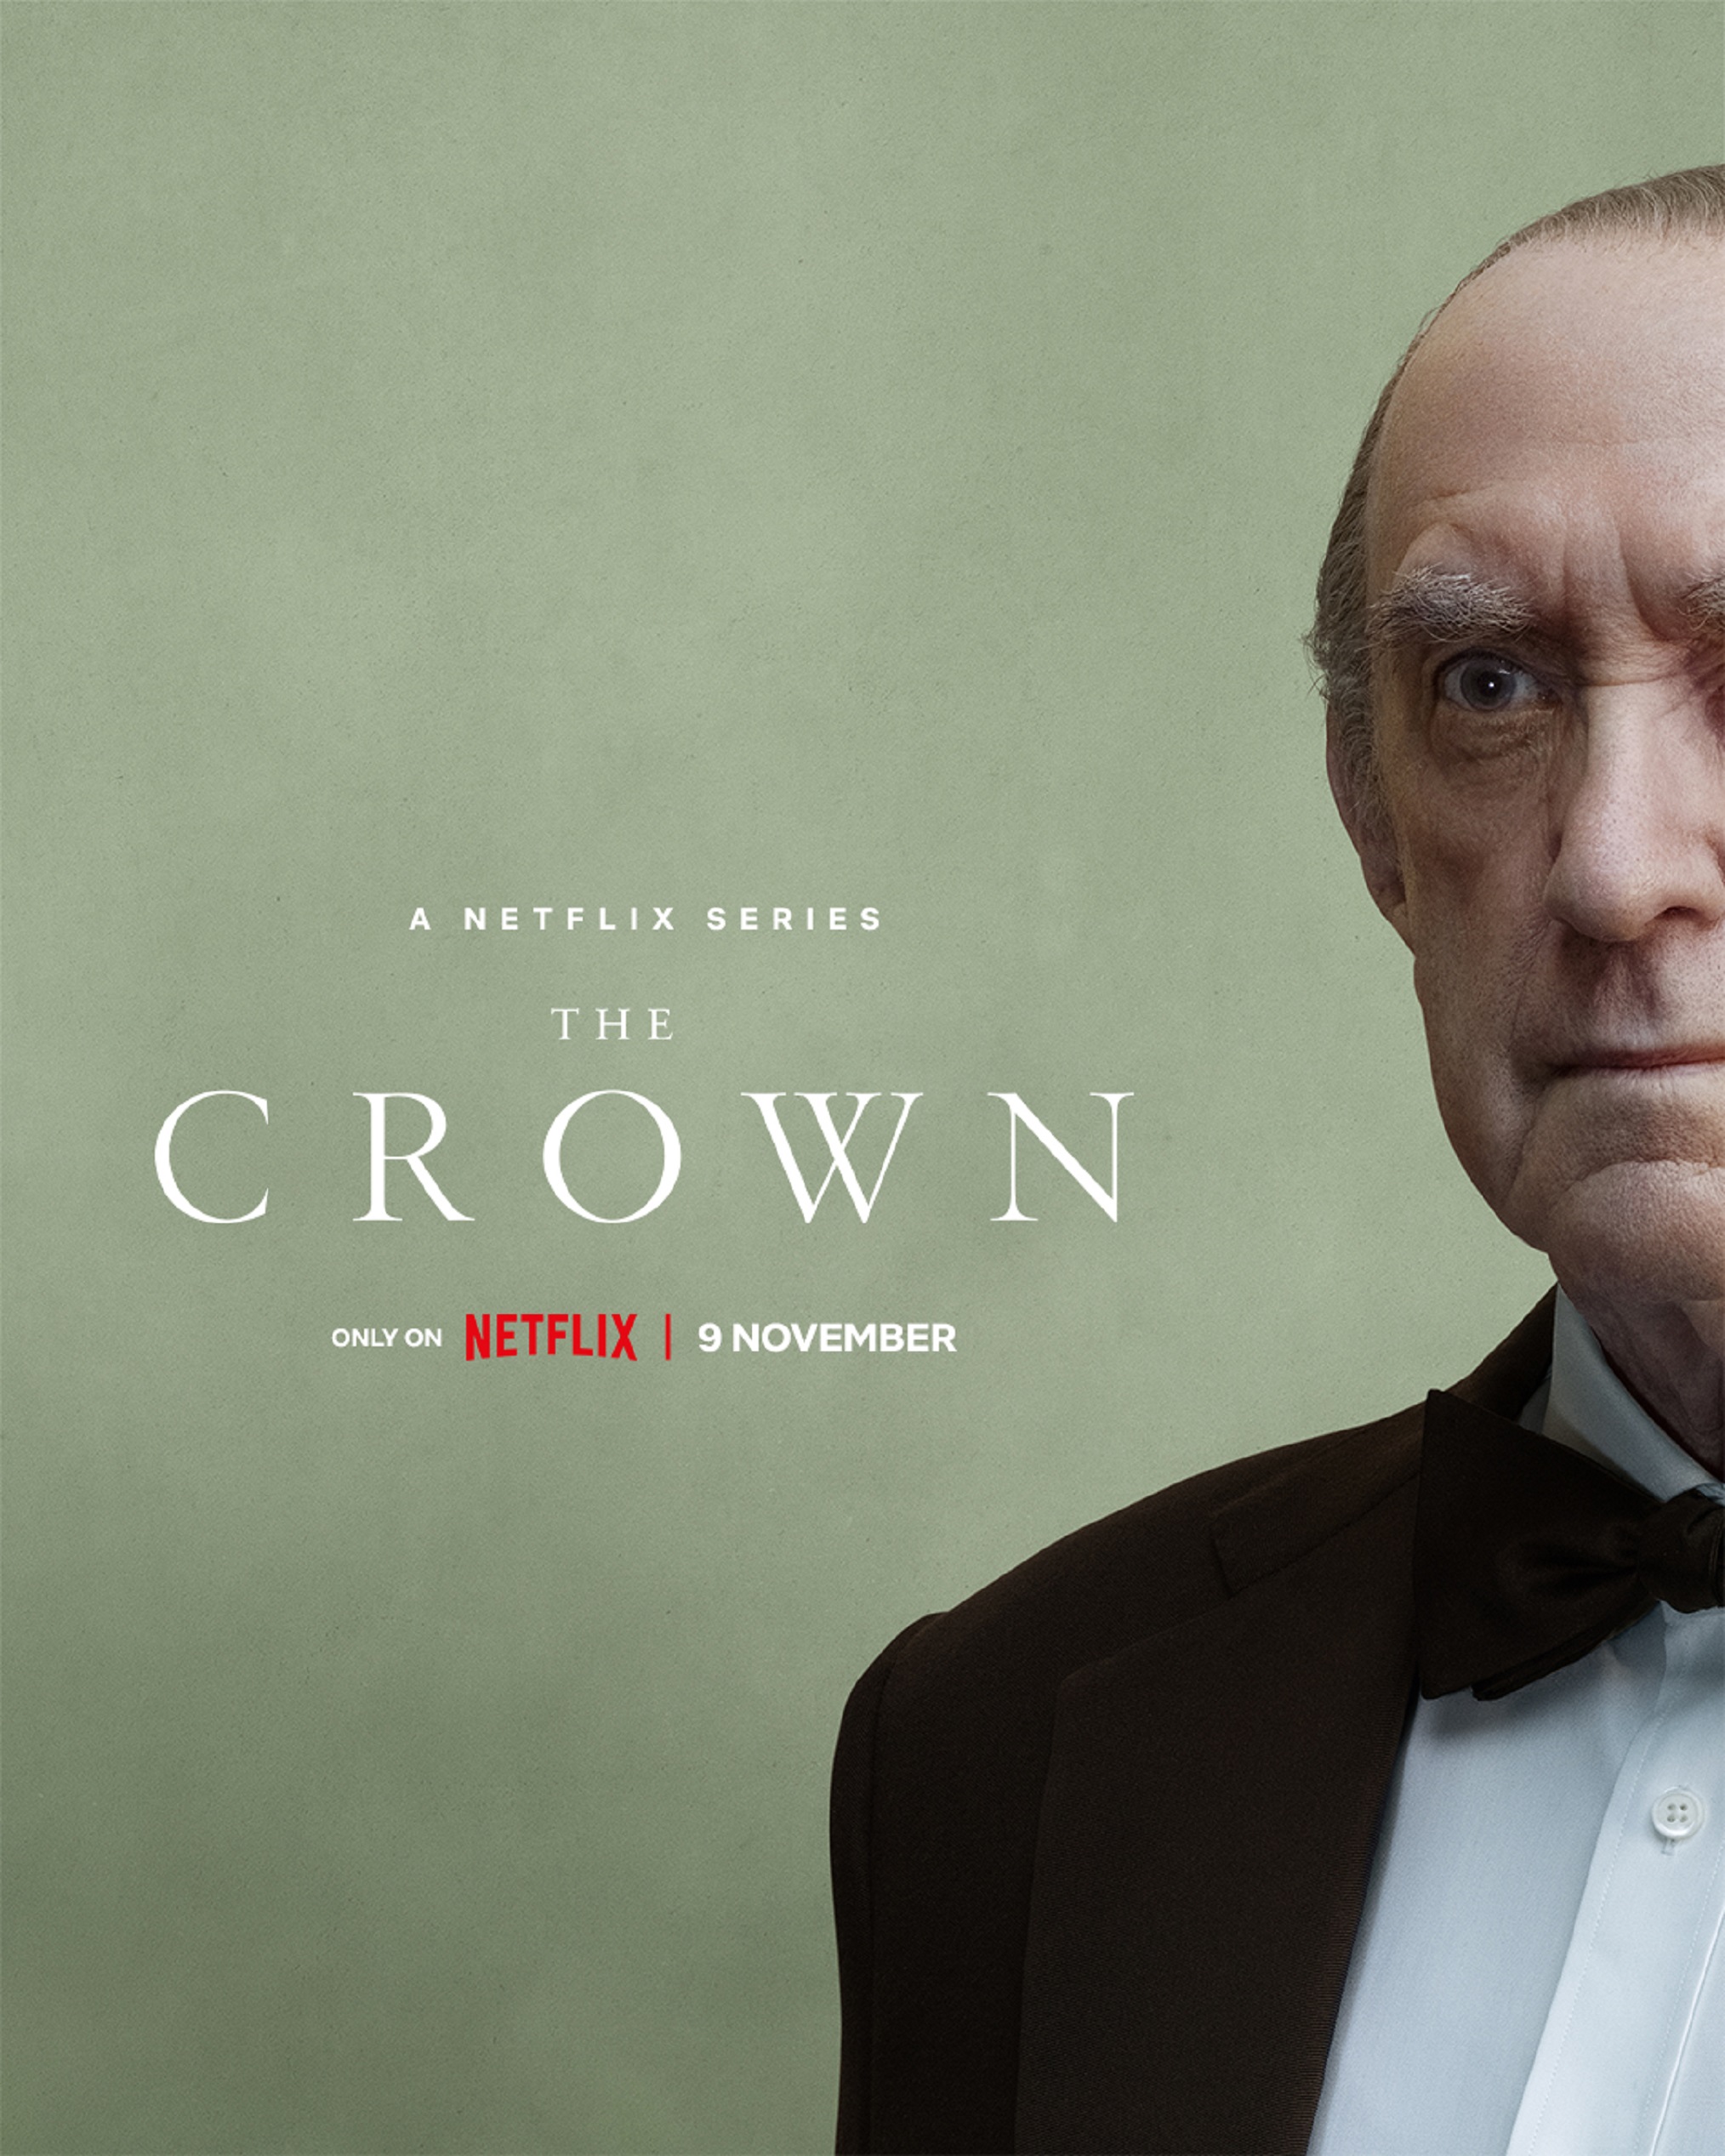 'The Crown' Season 5's Jonathan Pryce as Prince Philip